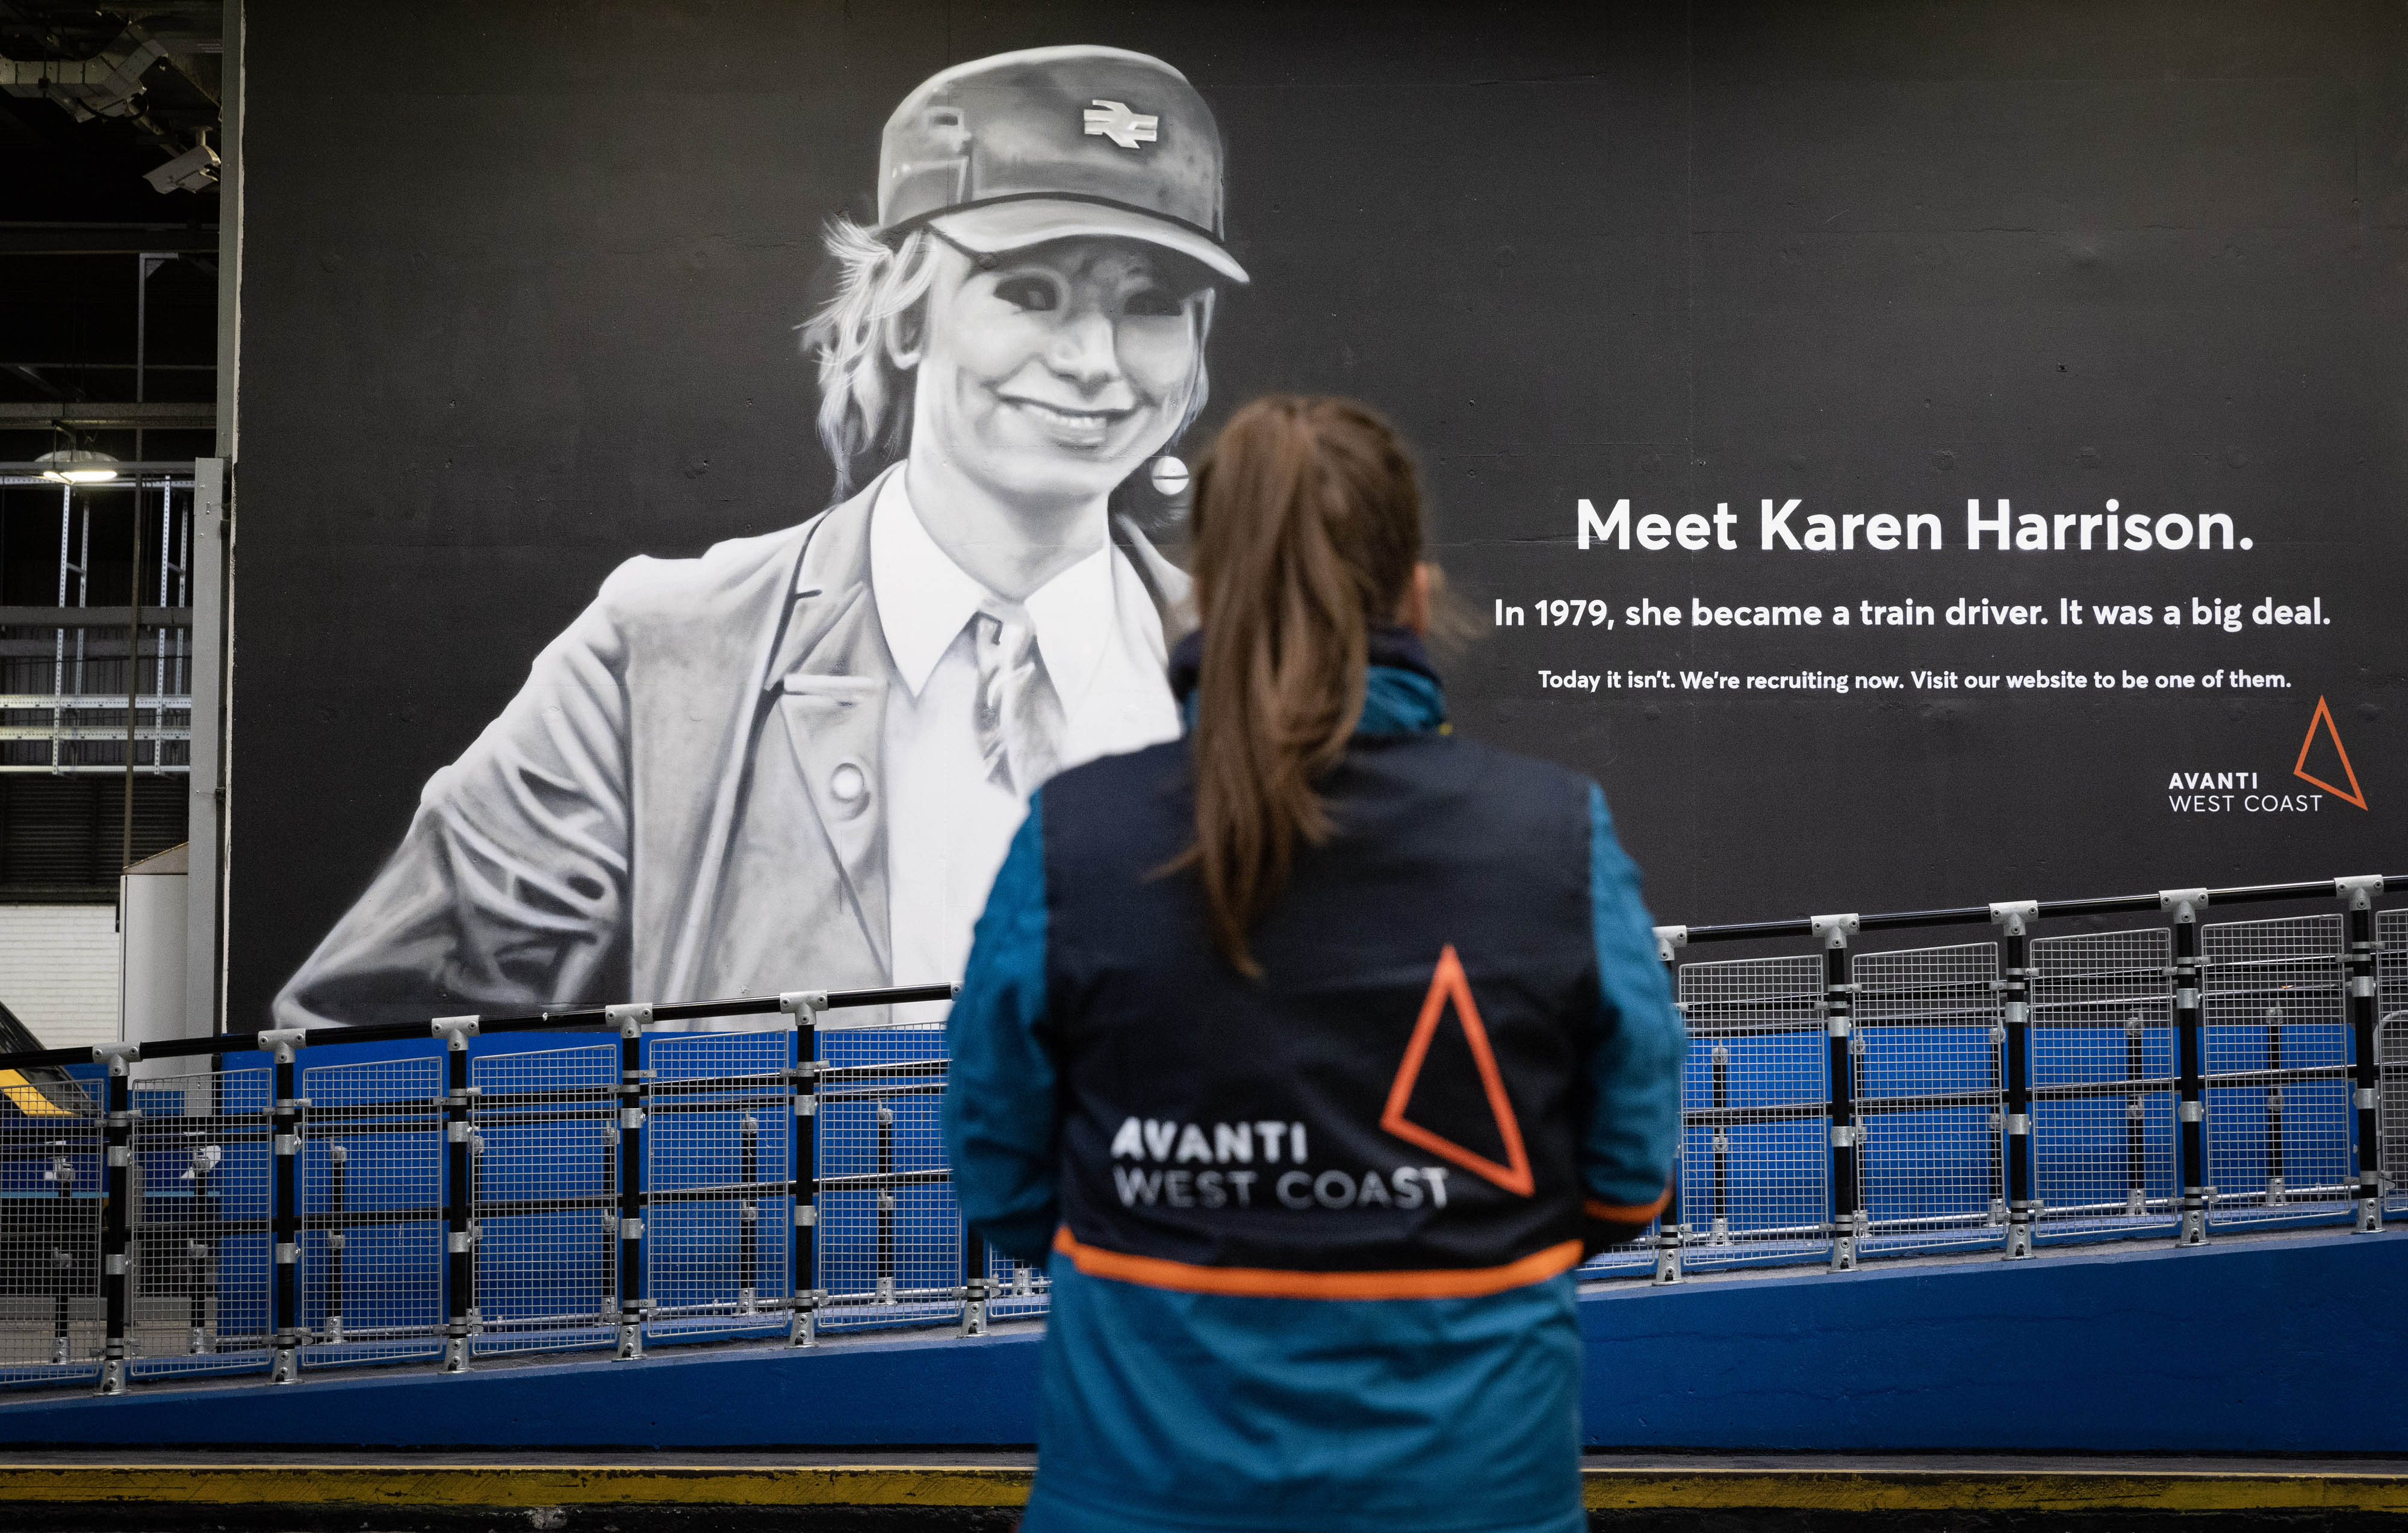 An Avanti West Coast crew member looks at a mural of Karen Harrison